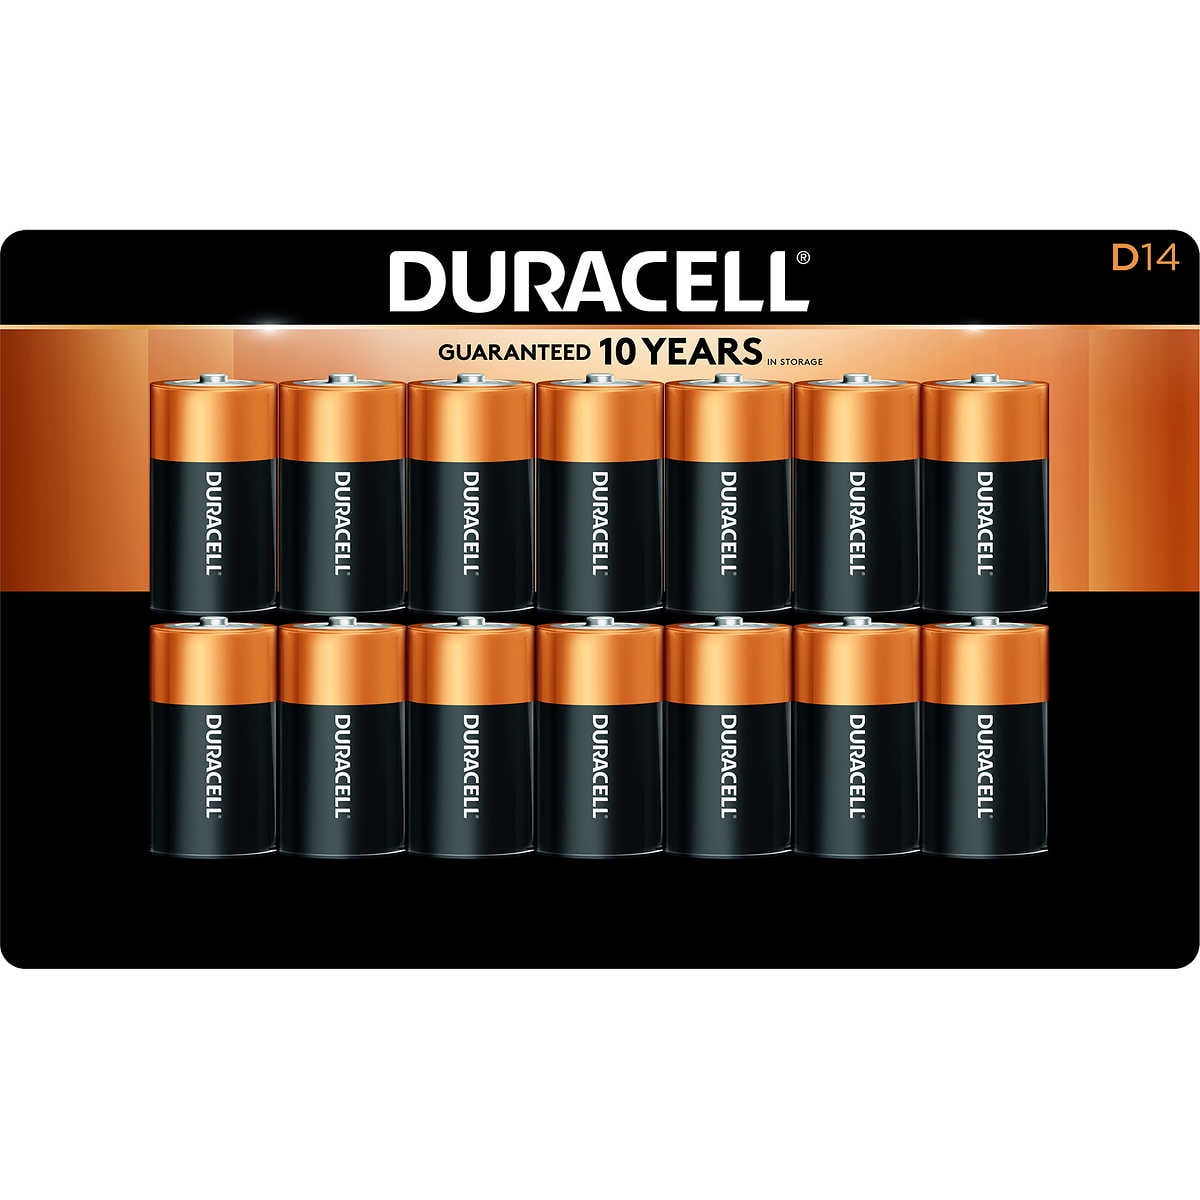 Duracell Coppertop Alkaline C, LR14 size Battery - MN1400B4